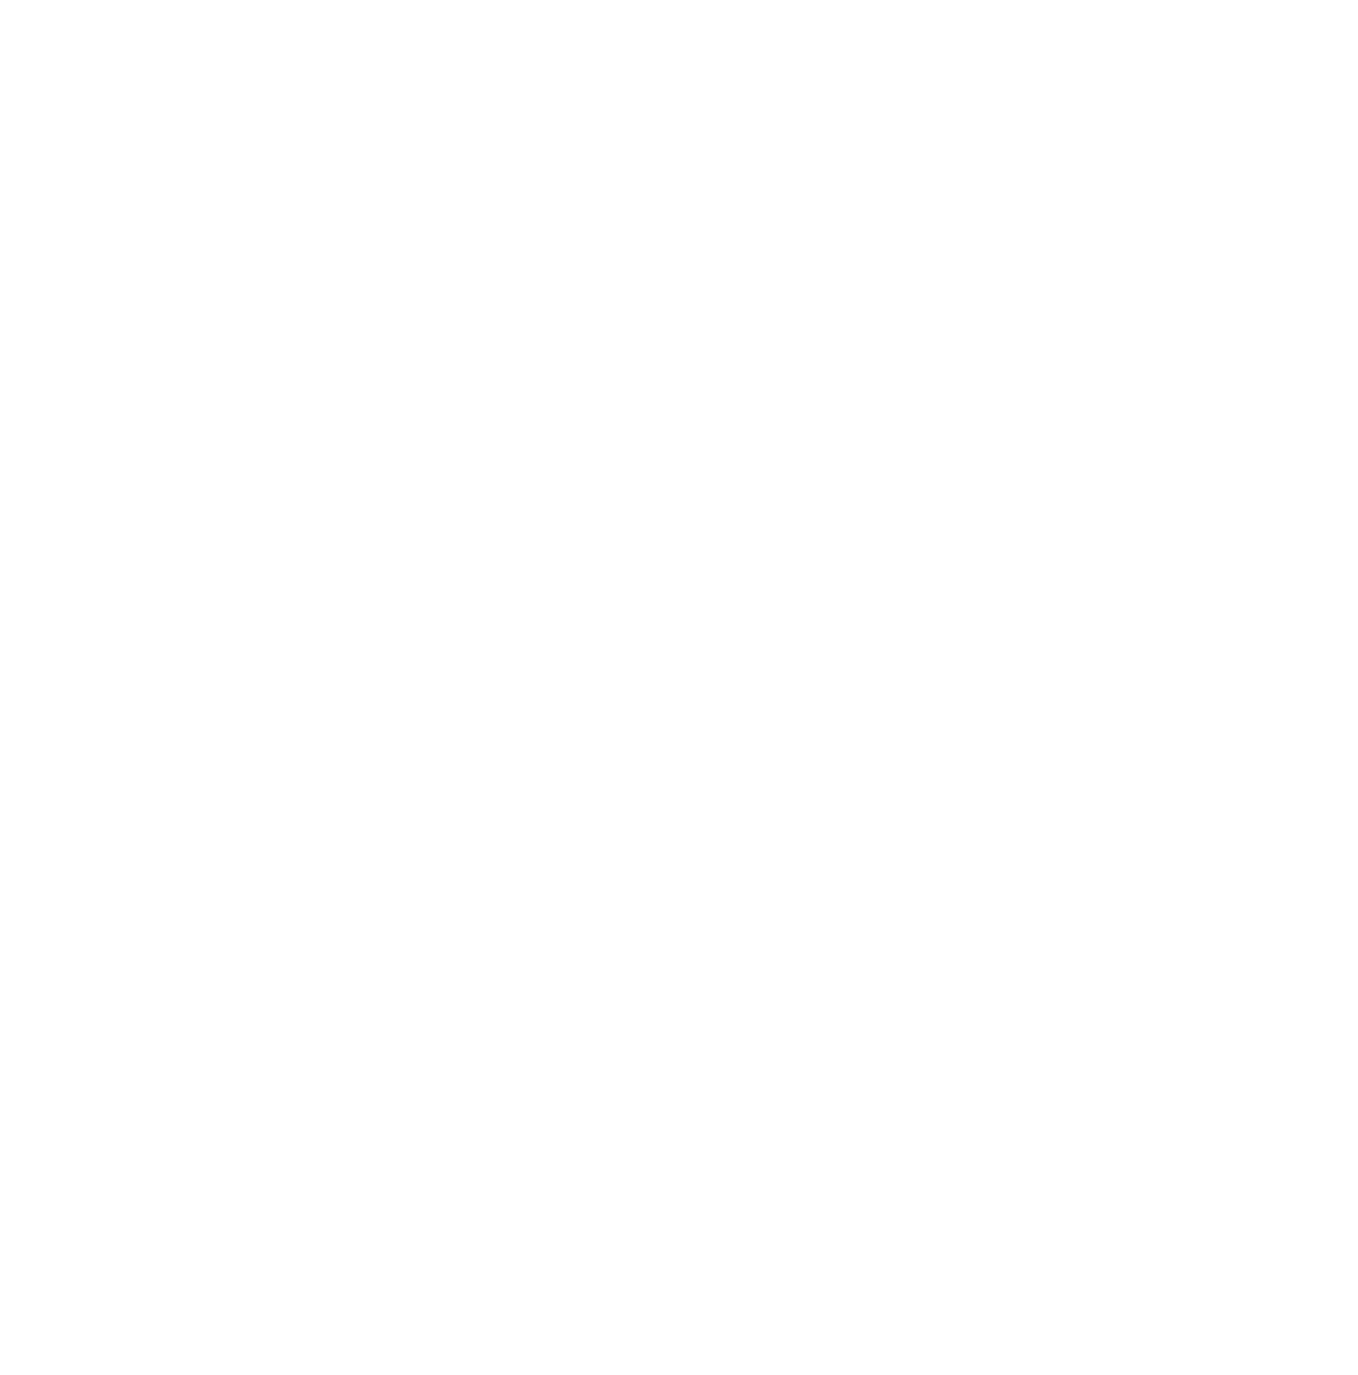 noahs ark christian preschool and child care logo